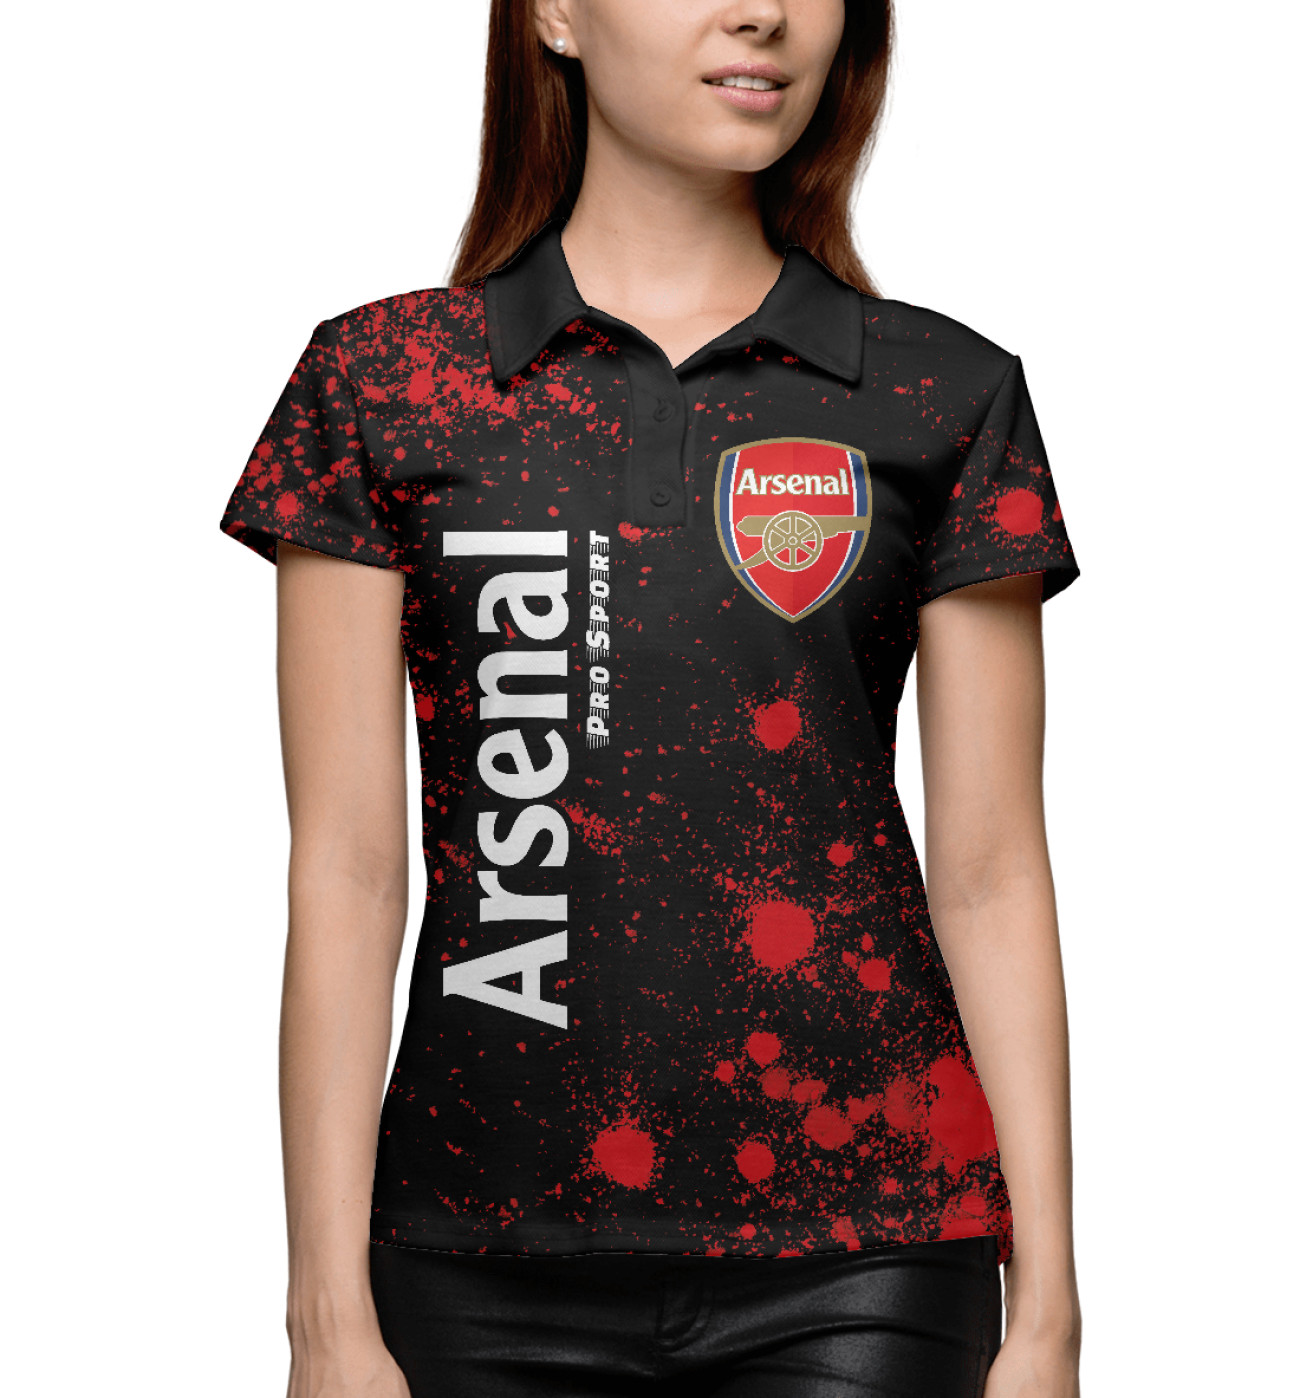 Женское Поло Arsenal | Pro Sport / Краски, артикул: ARS-513447-pol-1